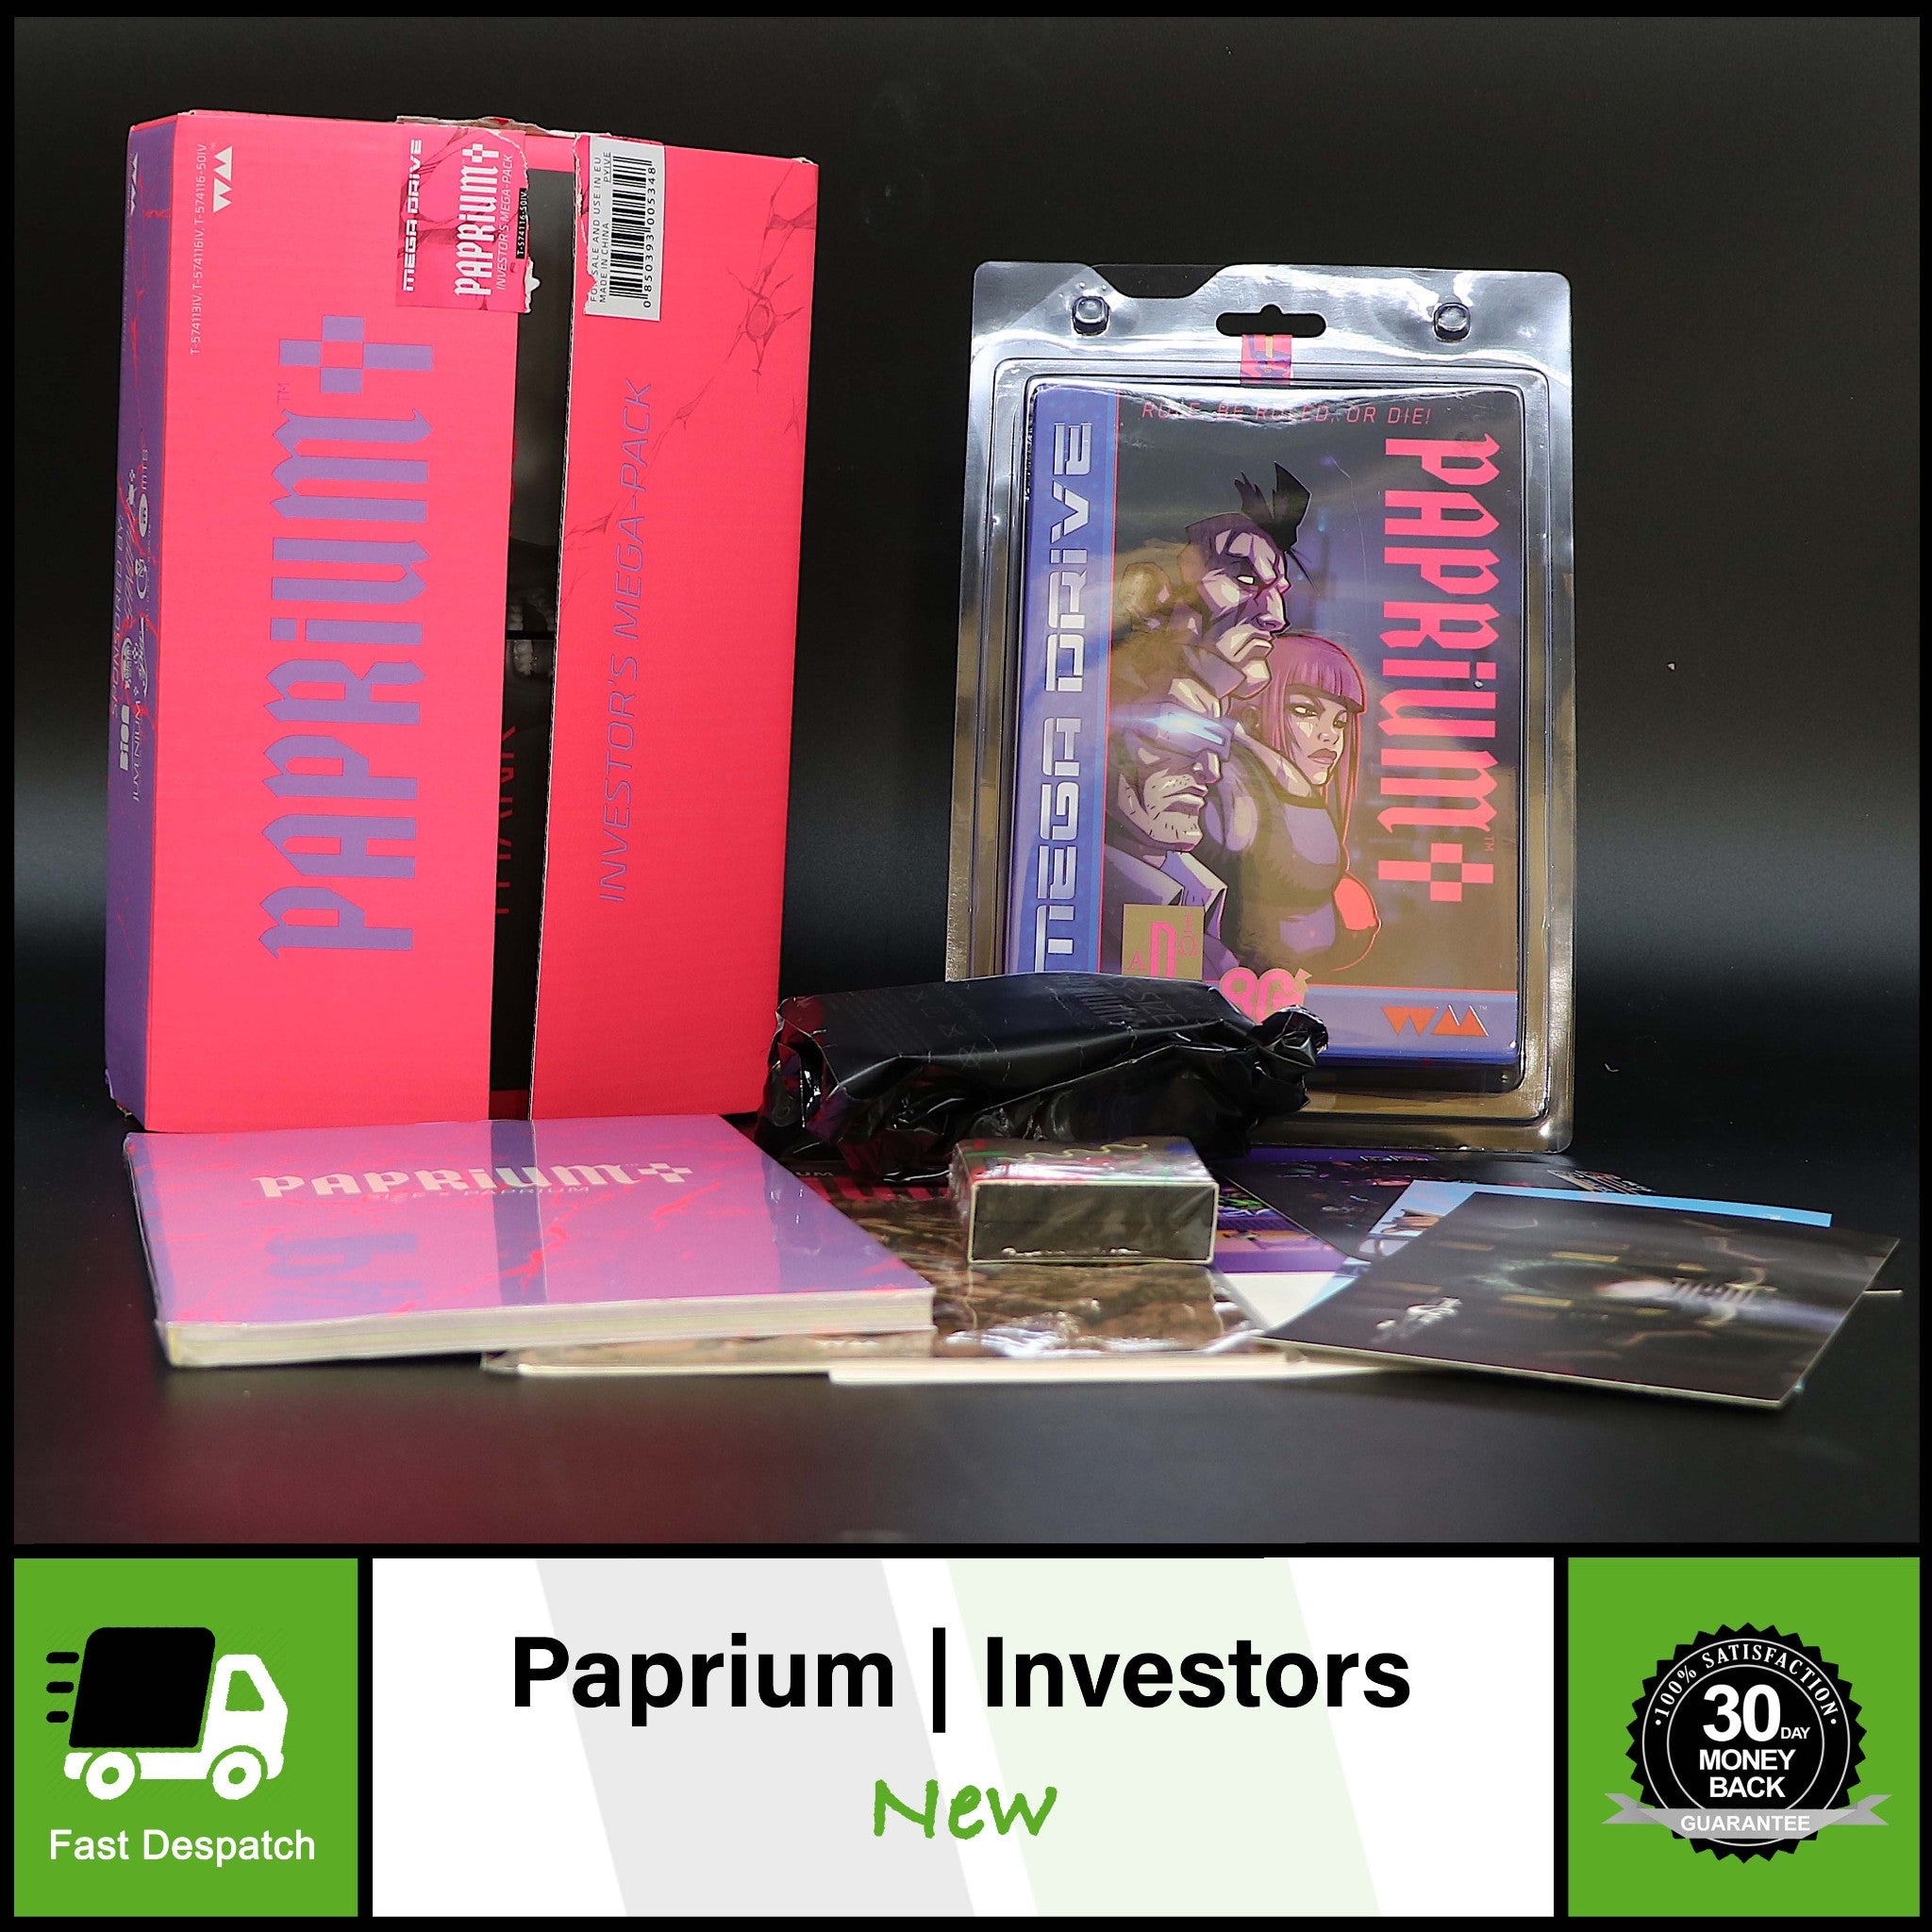 Paprium SEGA Mega Drive (GENESIS) Investor Edition by Watermelon Games | New